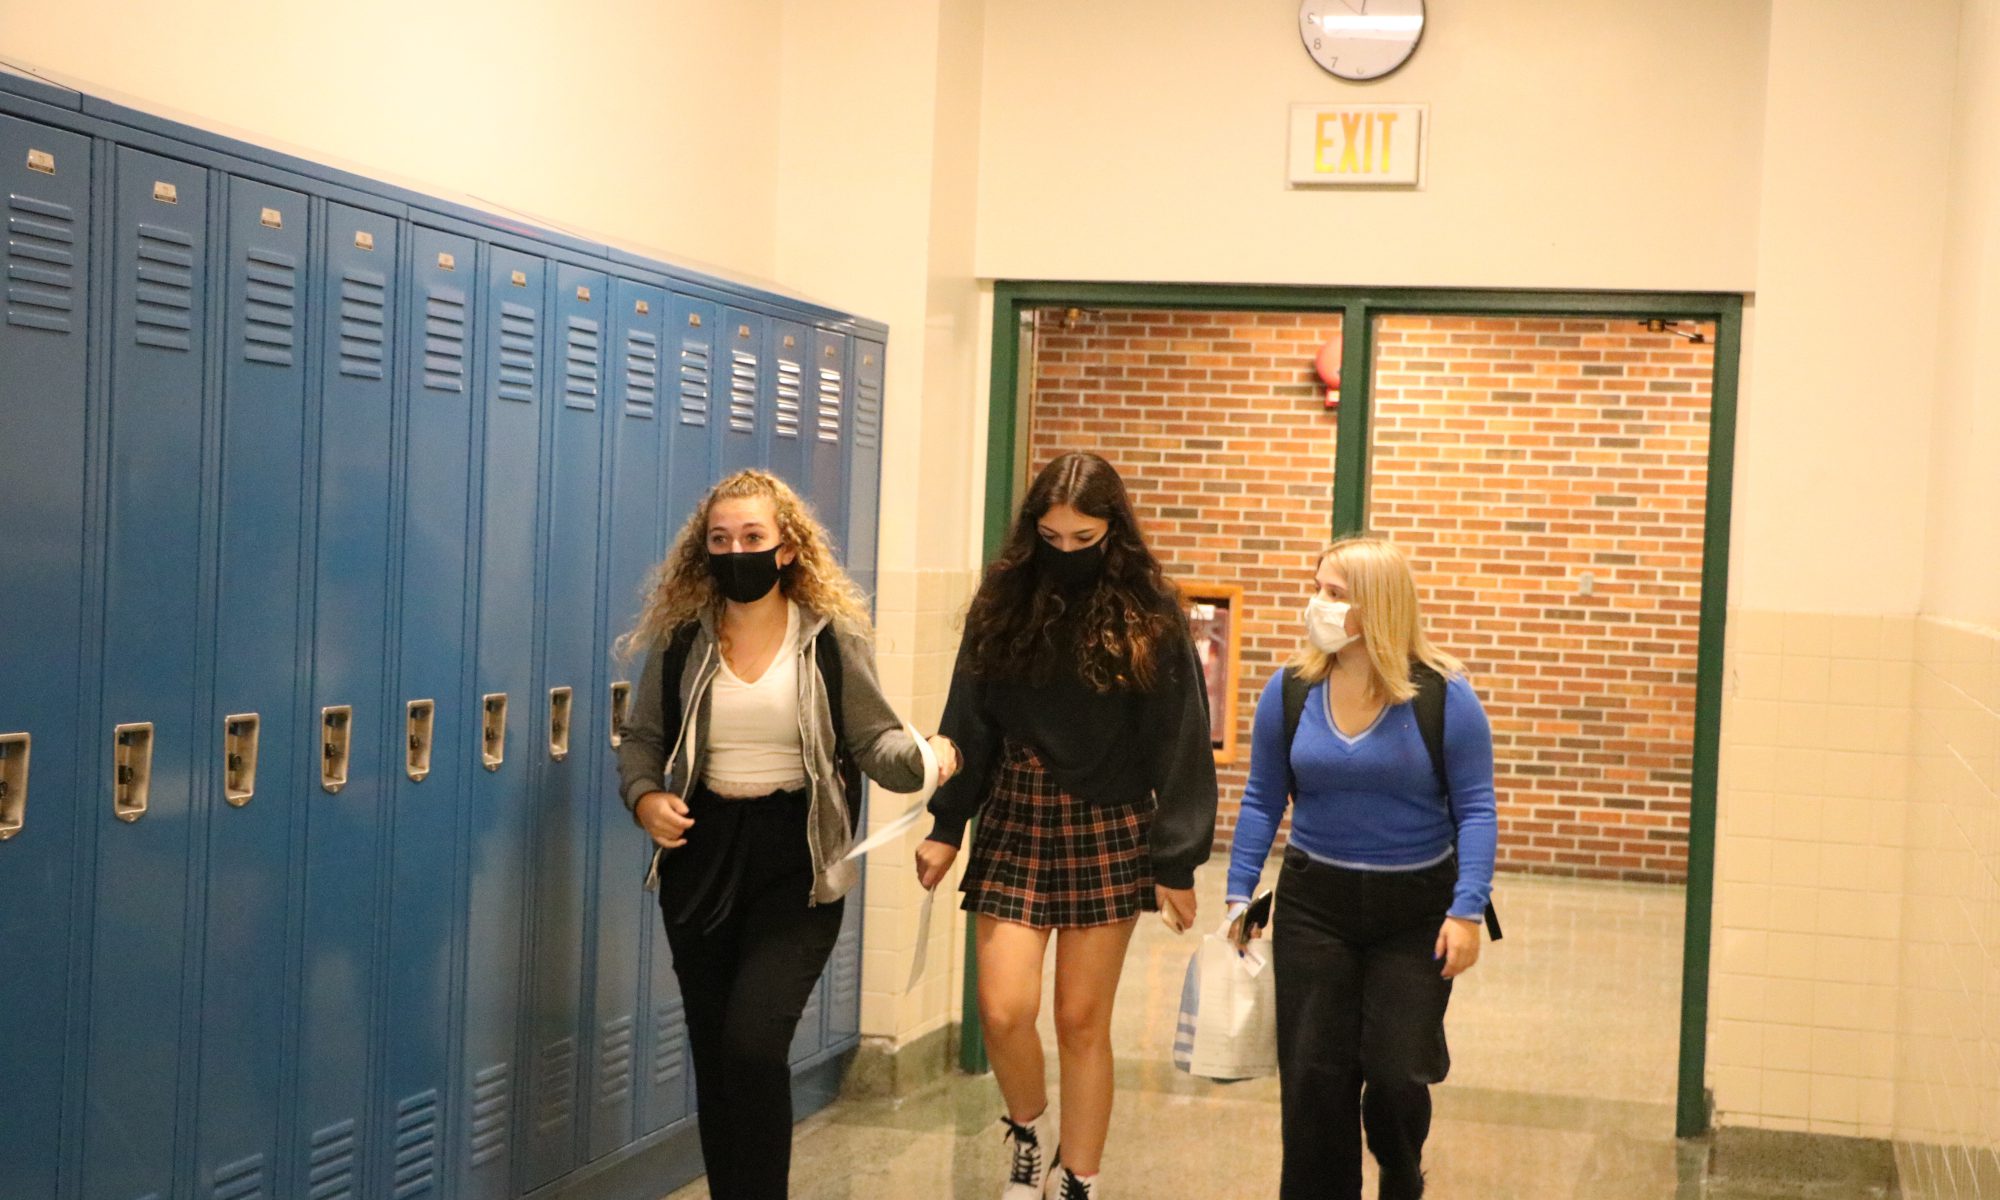 Students in hallway